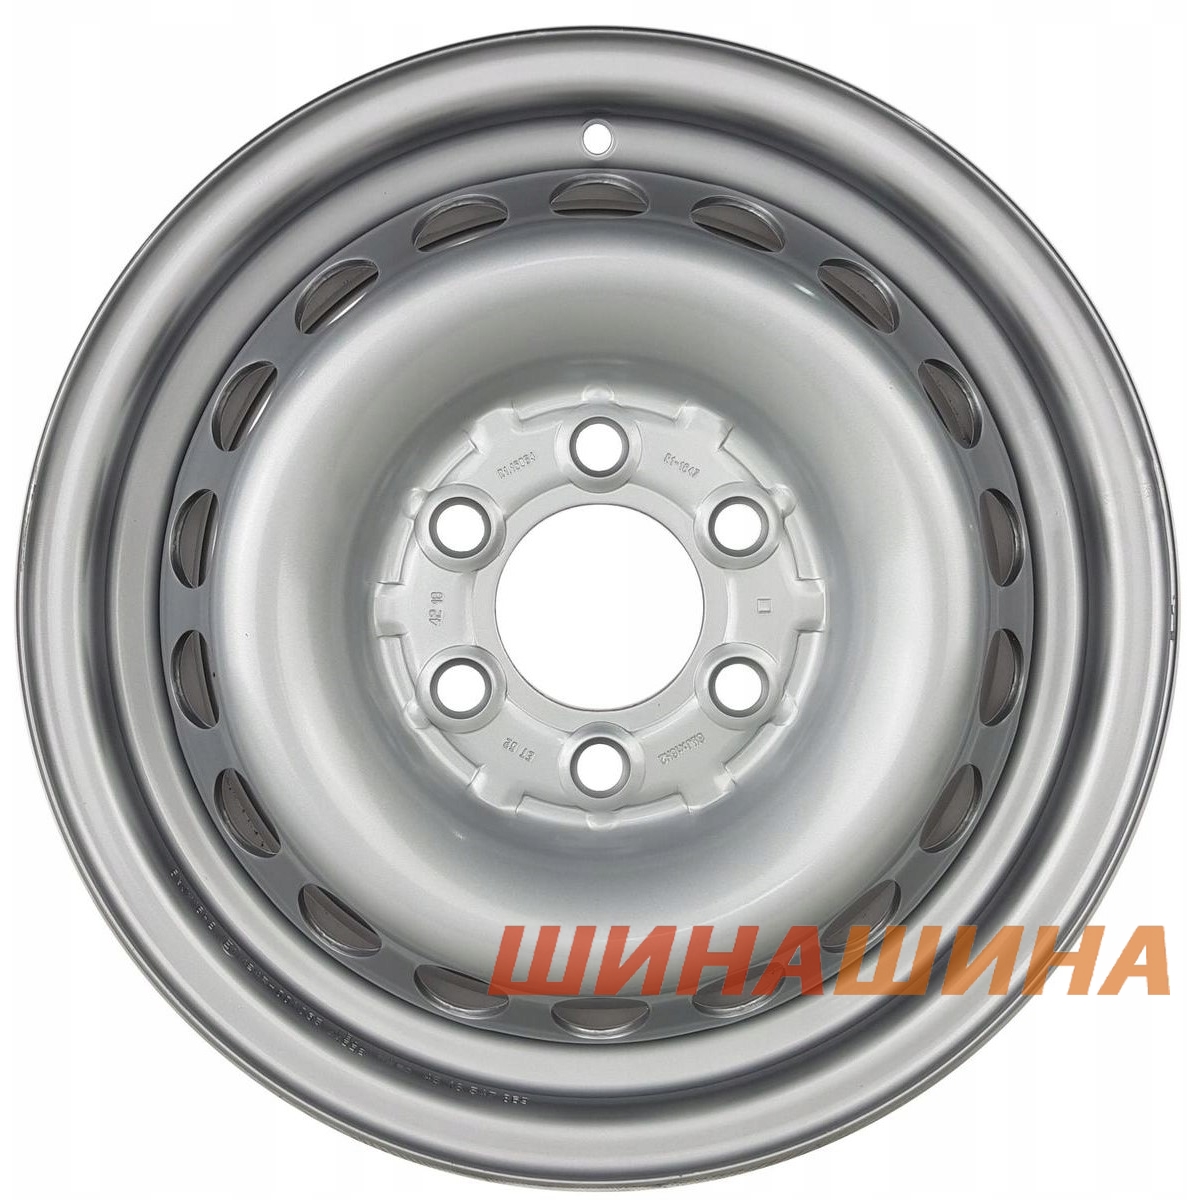 Magnetto Wheels MW R1-2050 6.5x16 6x130 ET54 DIA84.1 SM